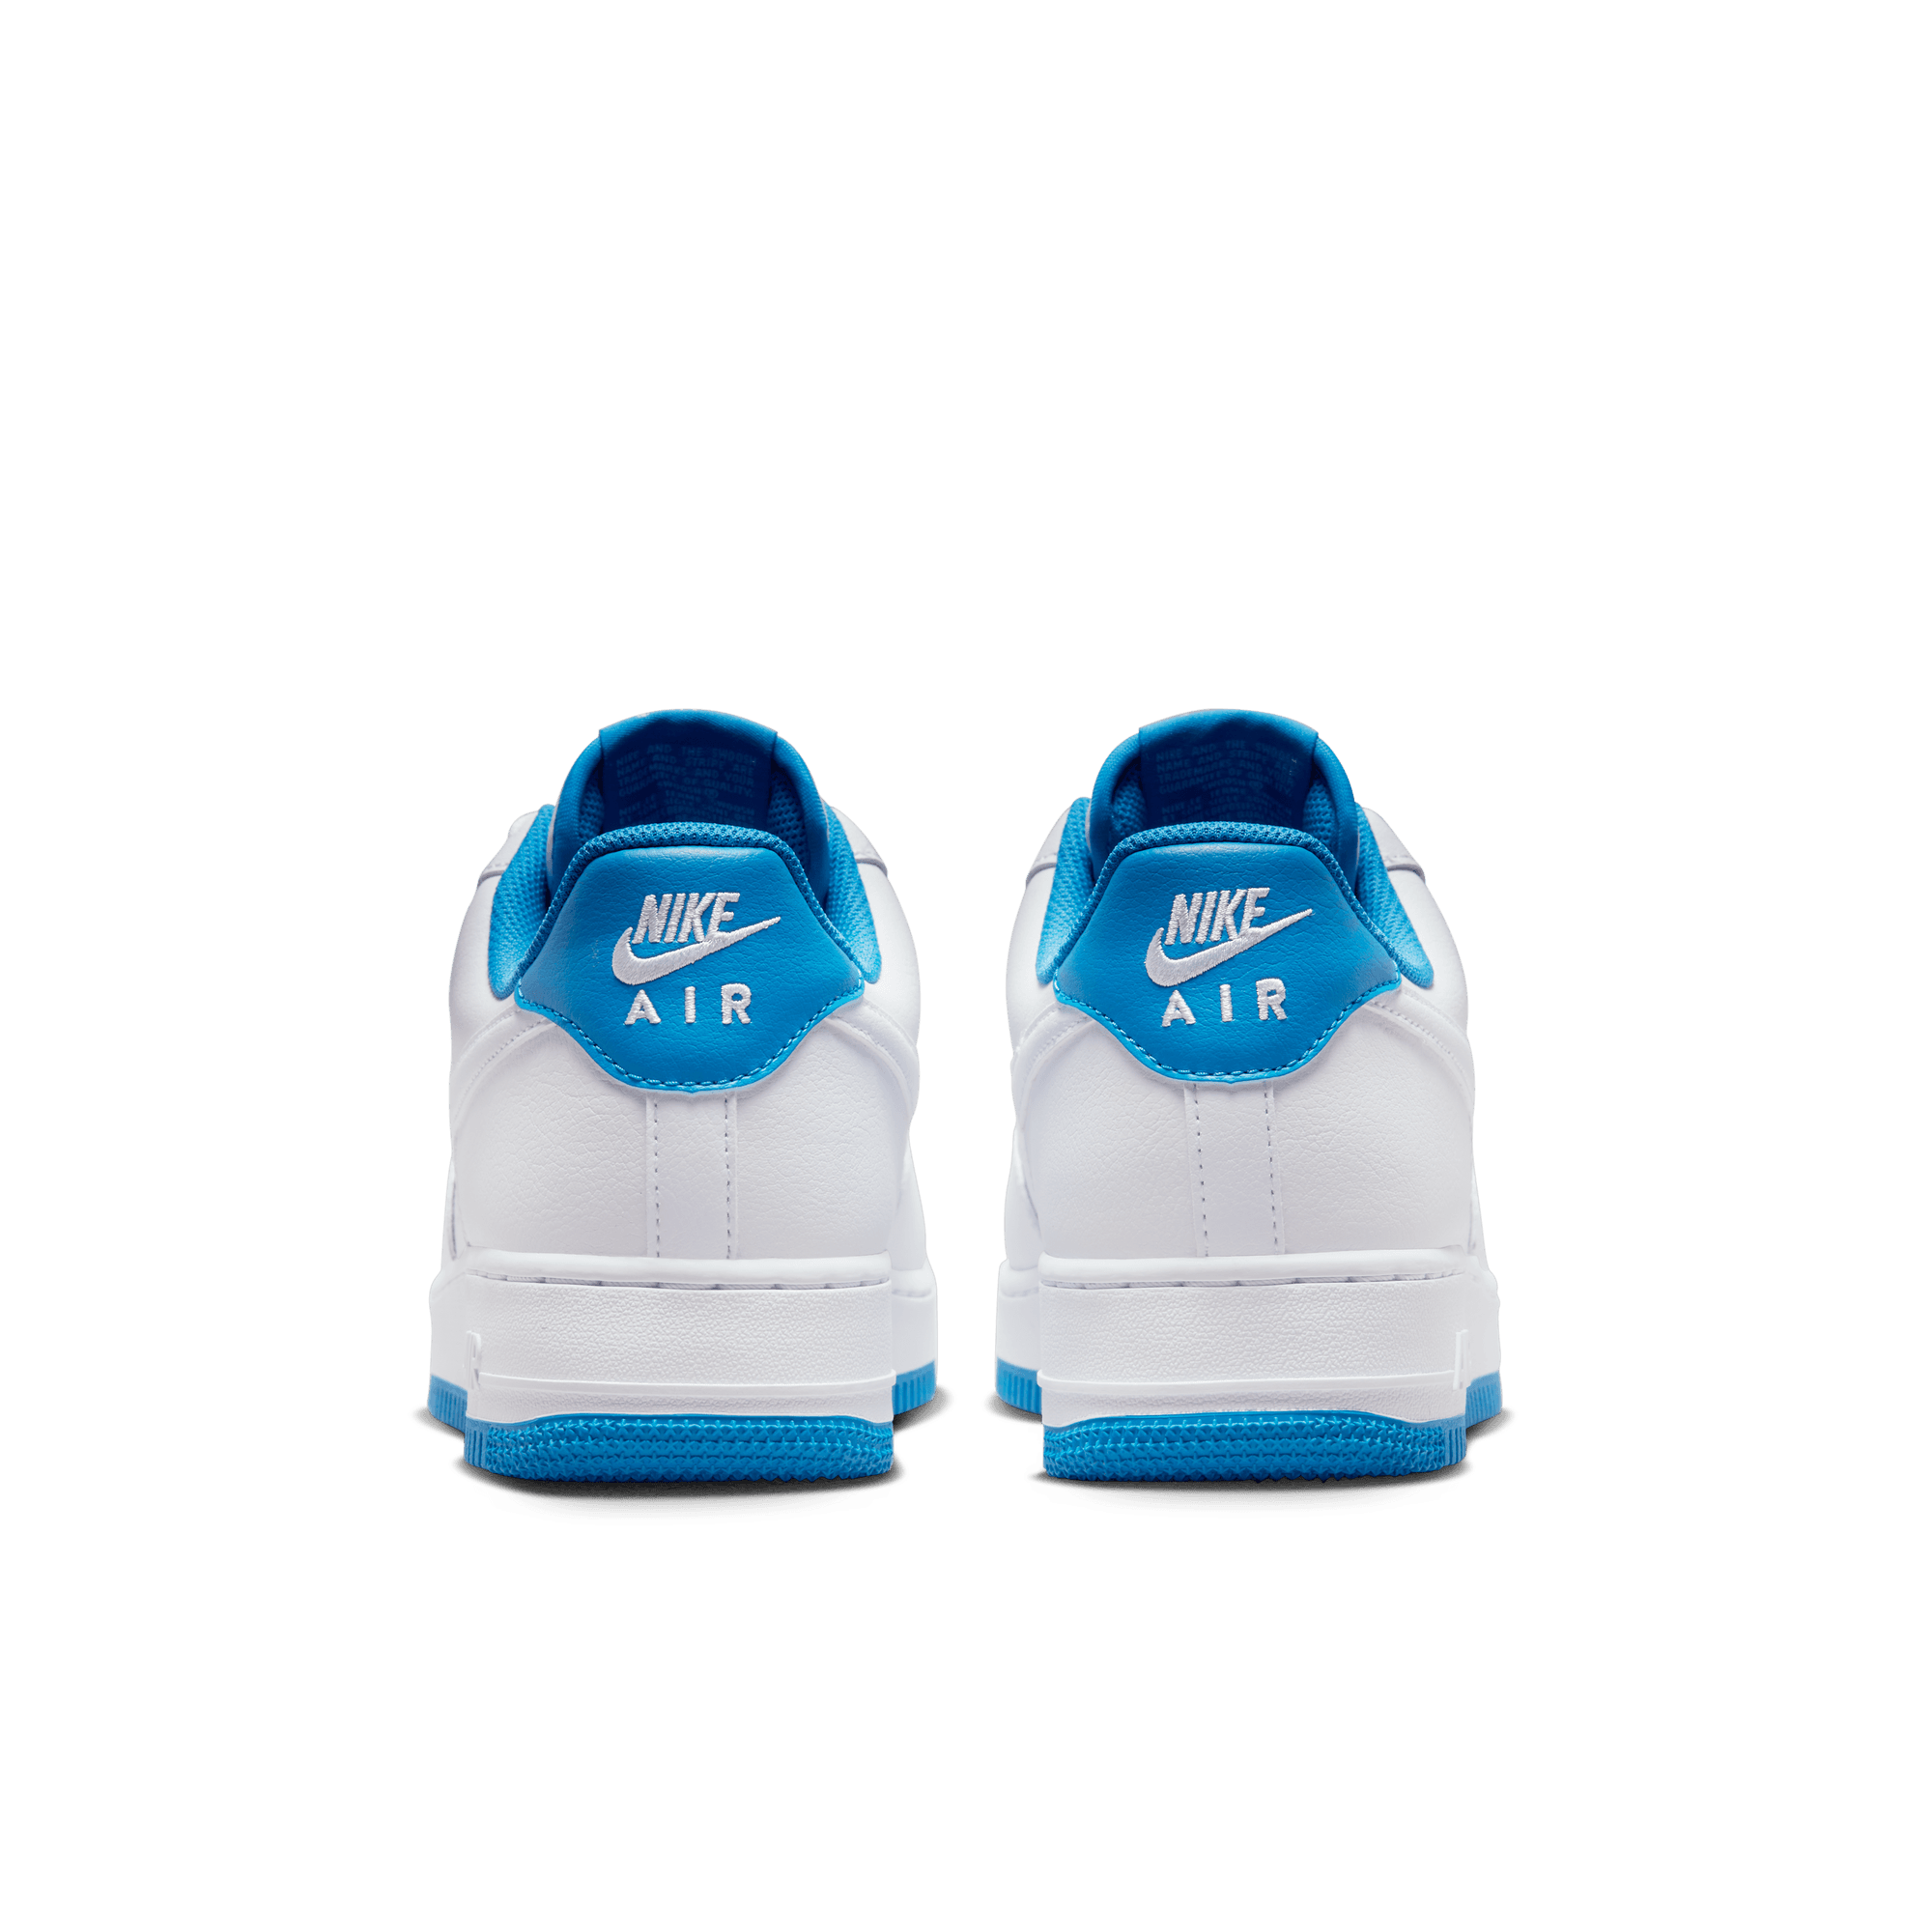  Nike Air Force 1 '07 LV8 White University Blue 101